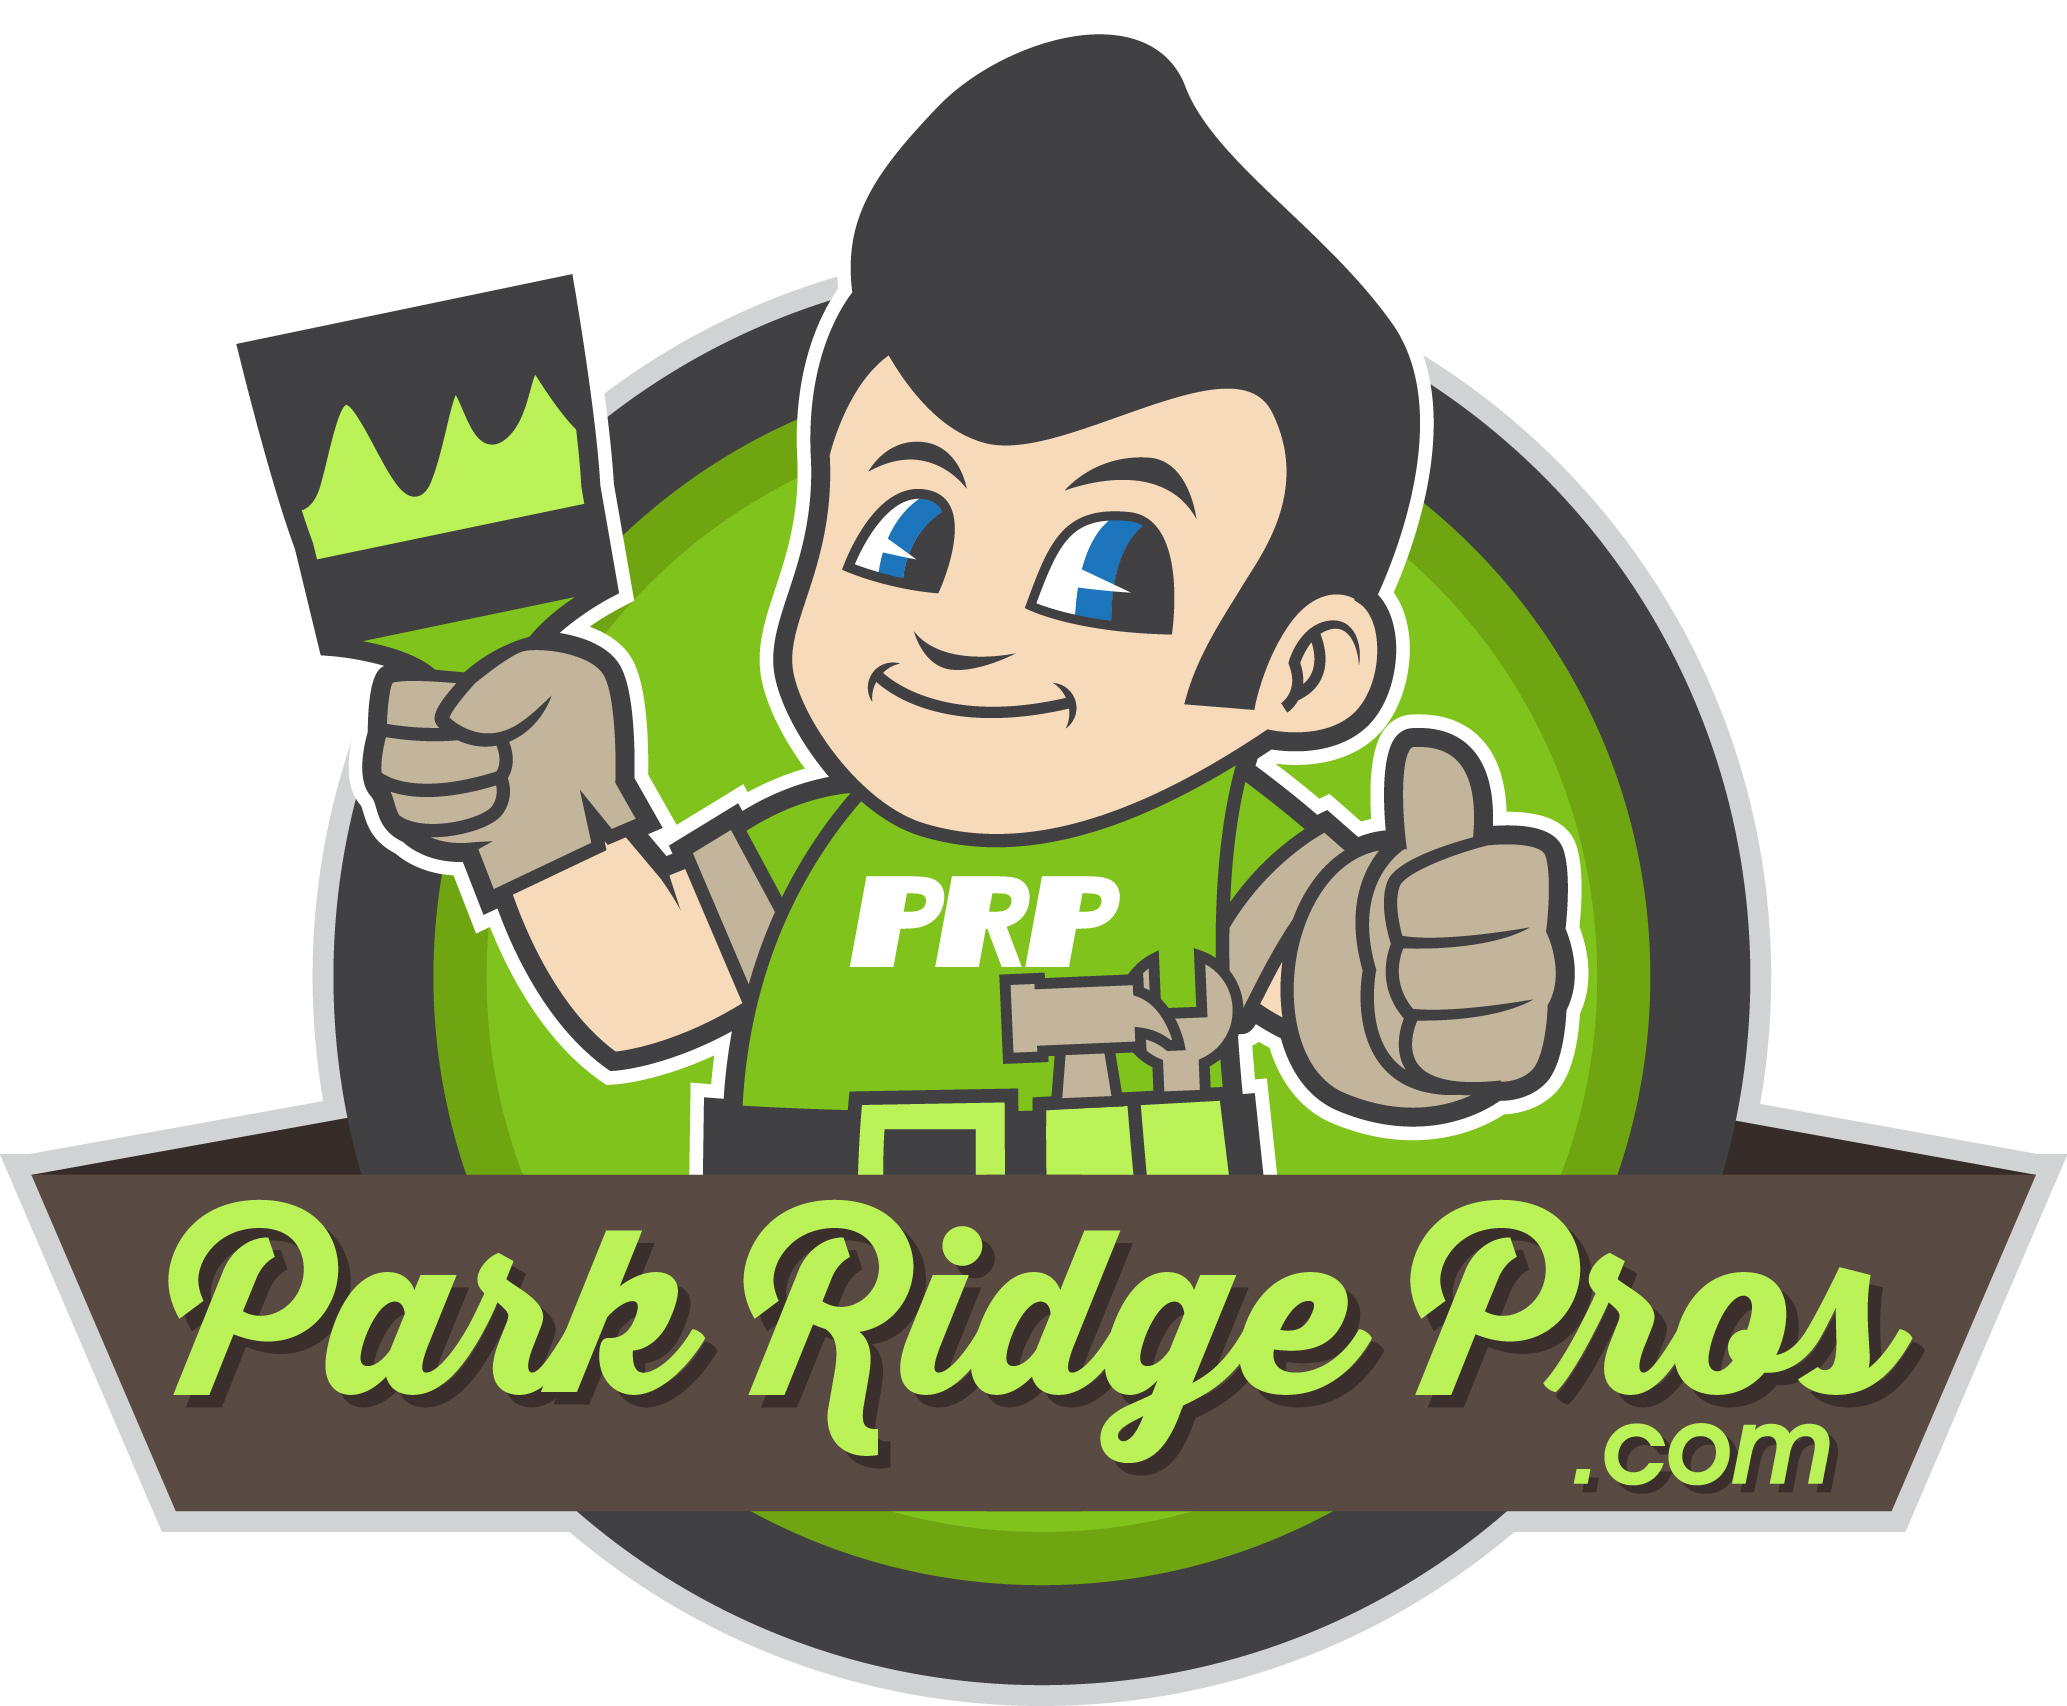 Park Ridge Pros